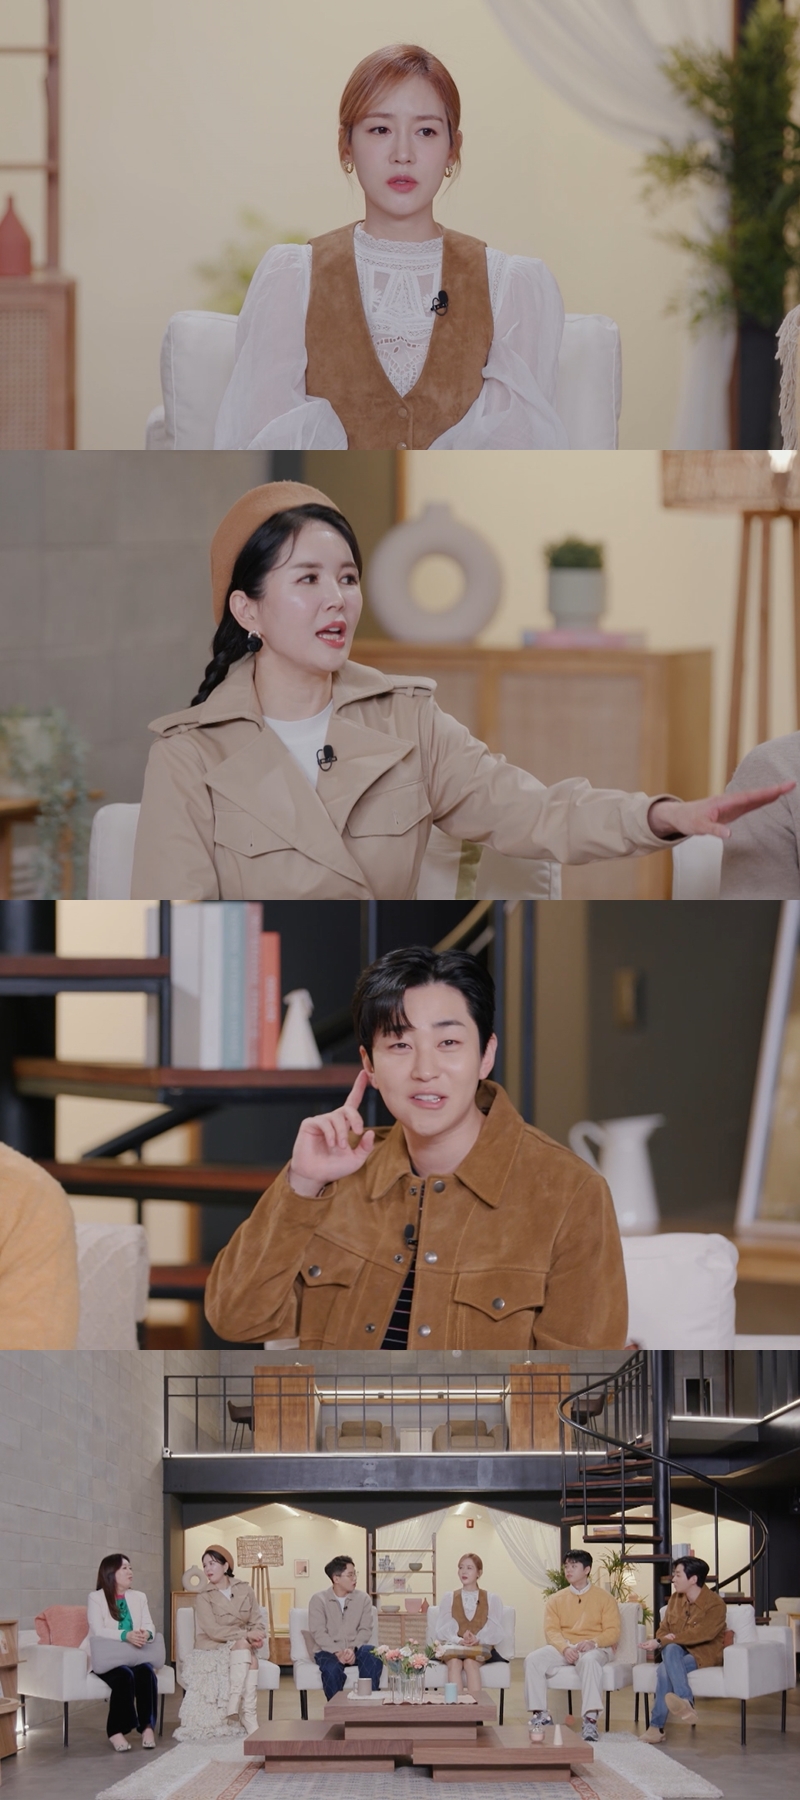 ▲ KBS2 예능프로그램 '이별도 리콜이 되나요?' 스틸. 제공| KBS